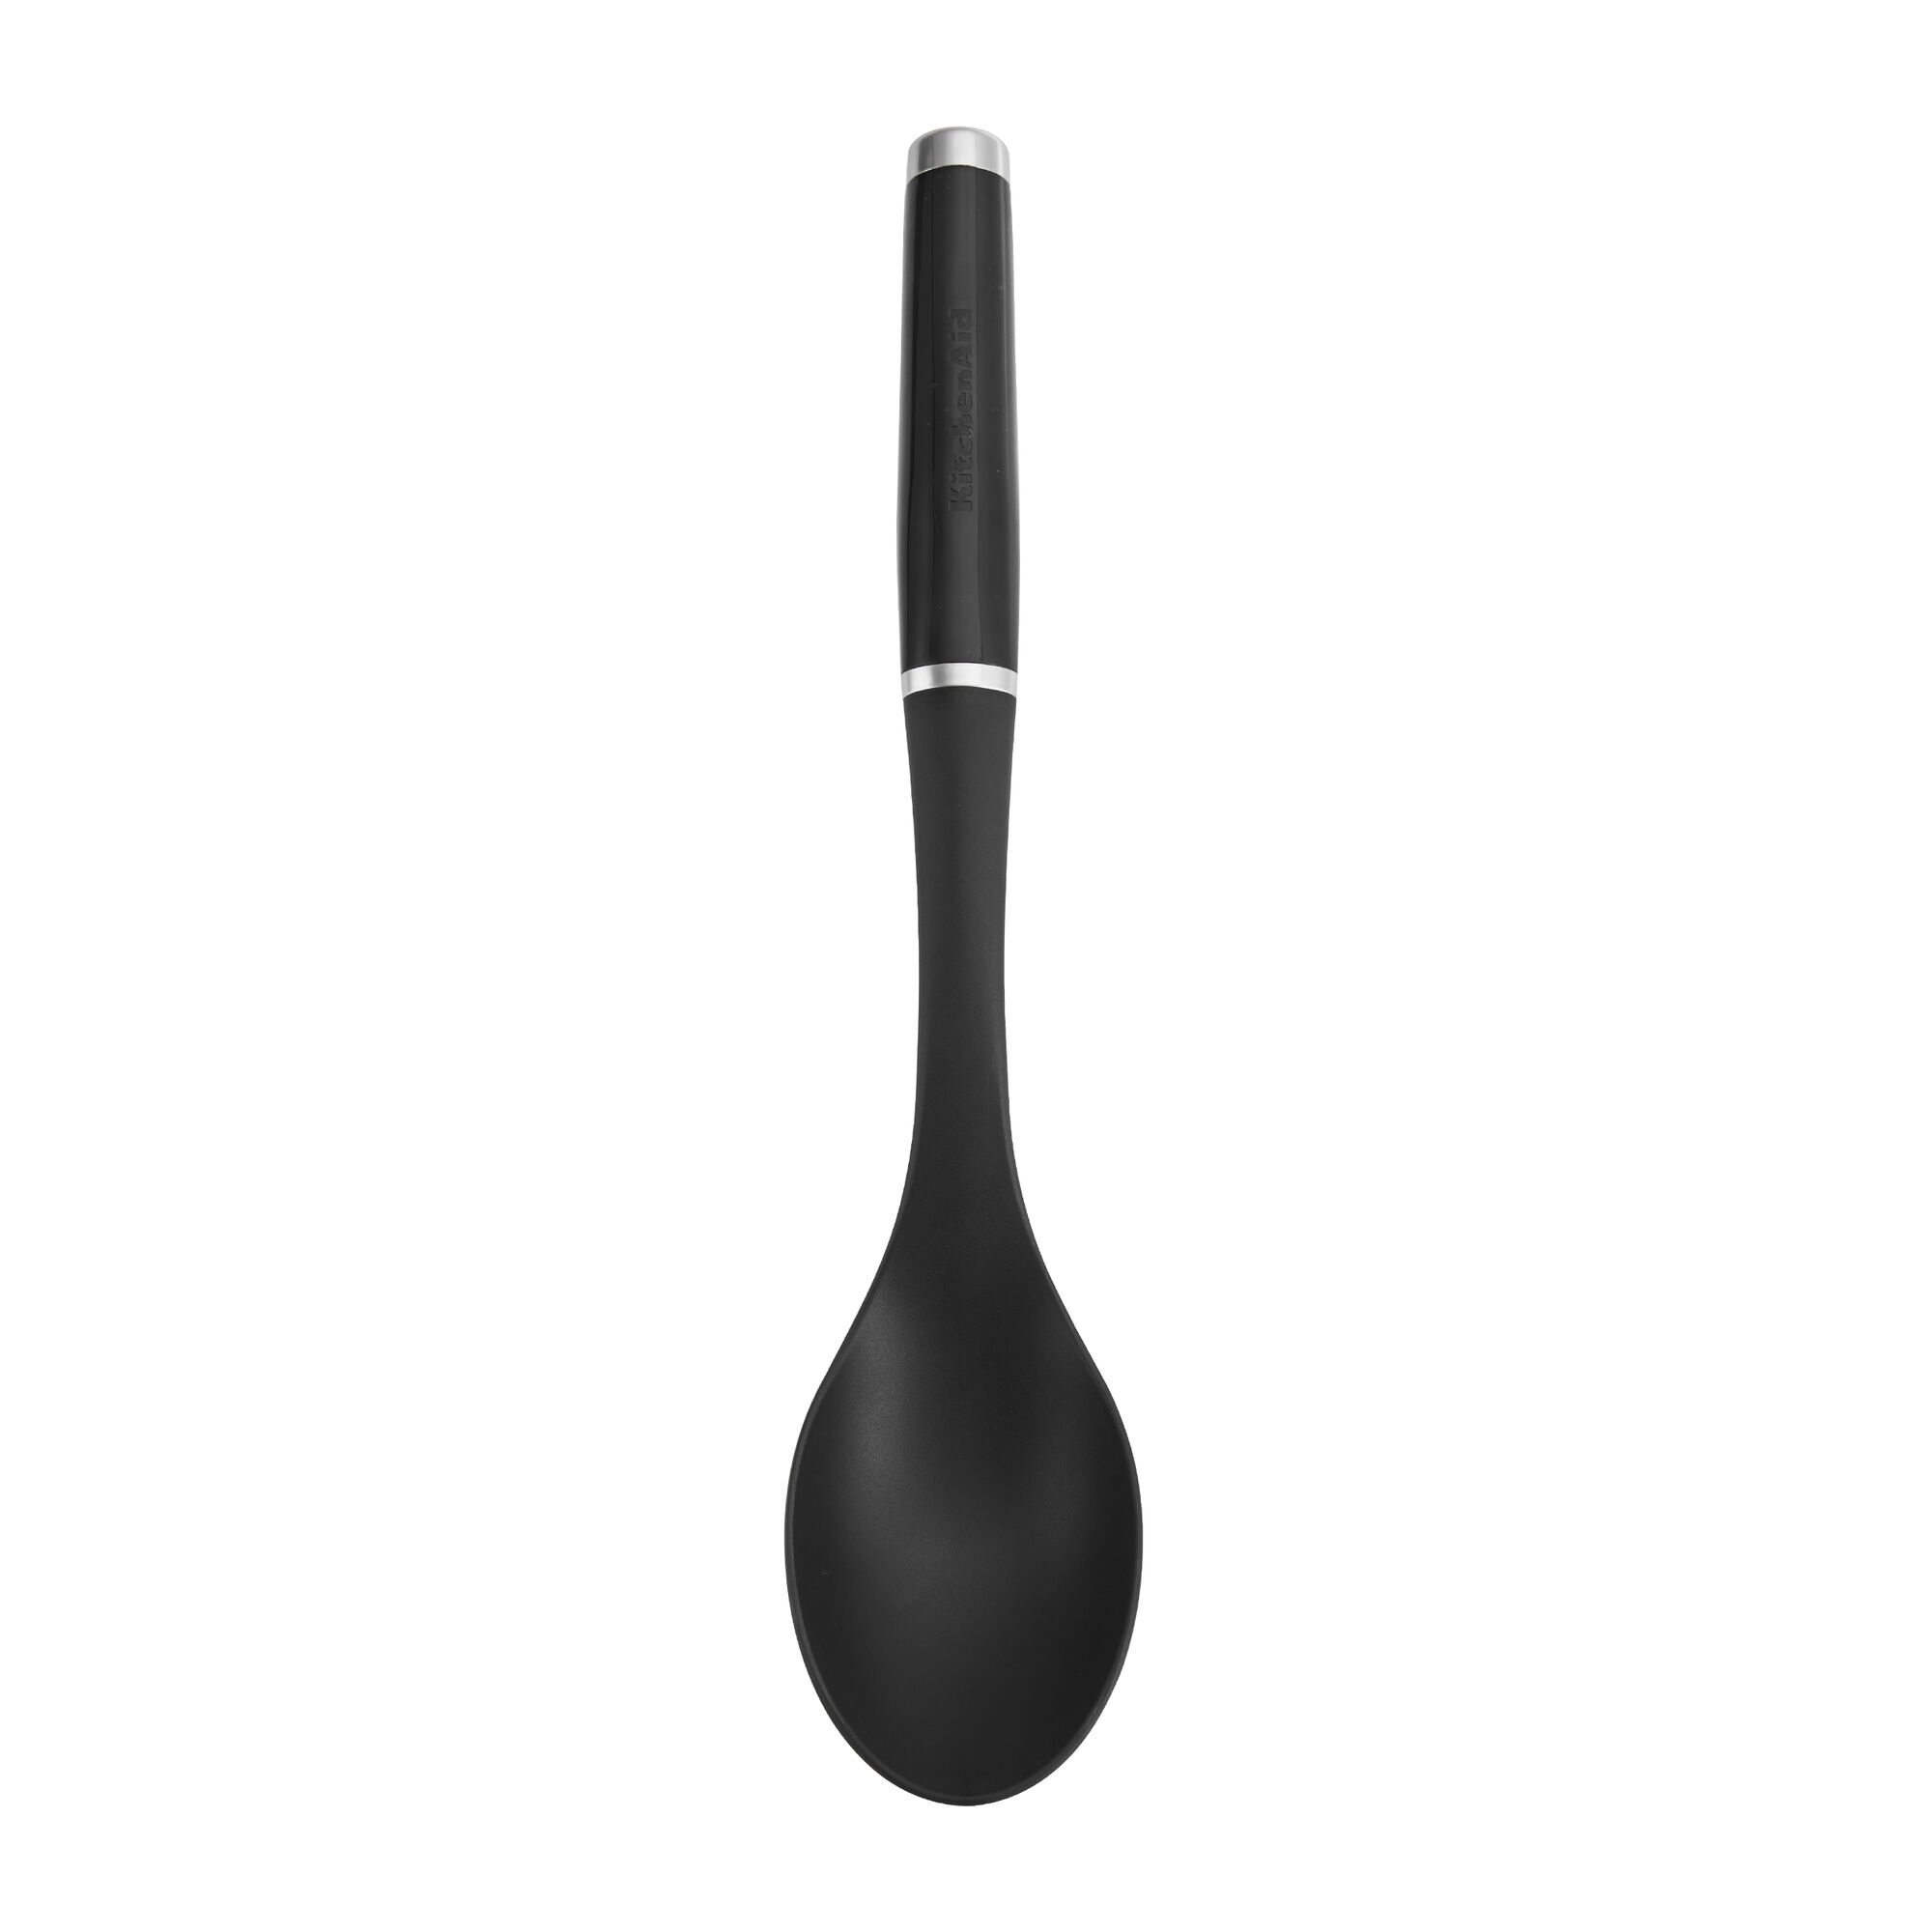 KitchenAid Classic Spoon Spatula | Aqua